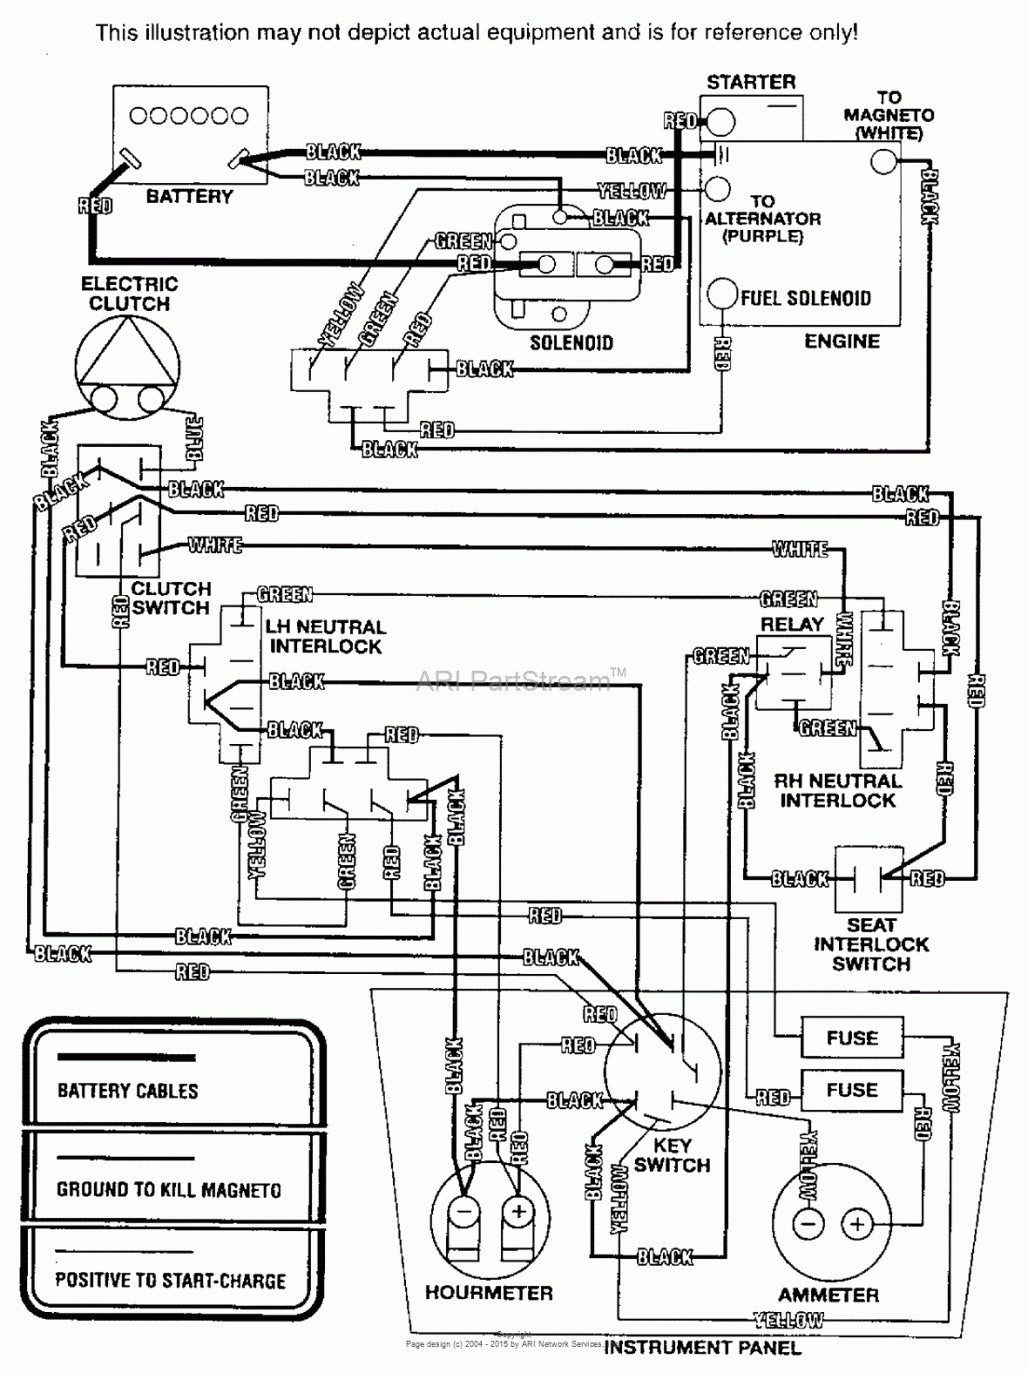 Briggs and stratton vanguard parts diagram delightful impression zoom Parts large